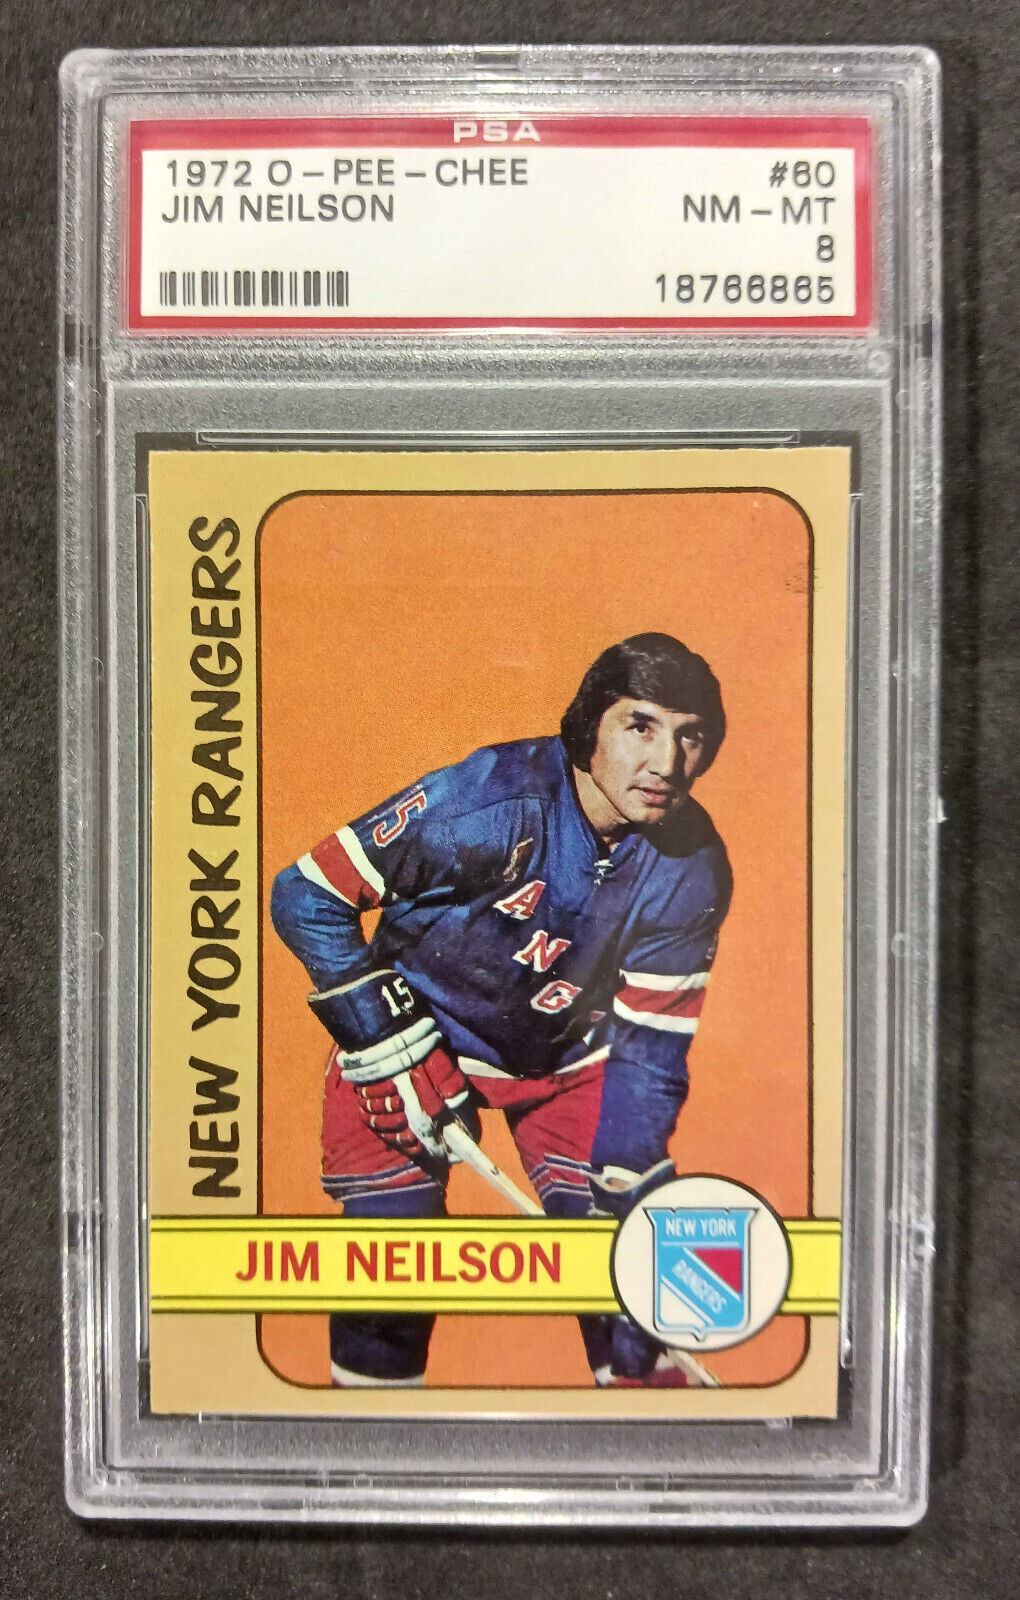 1972 O-Pee-Chee Jim Neilson #60 PSA NM-MT 8, 18766865